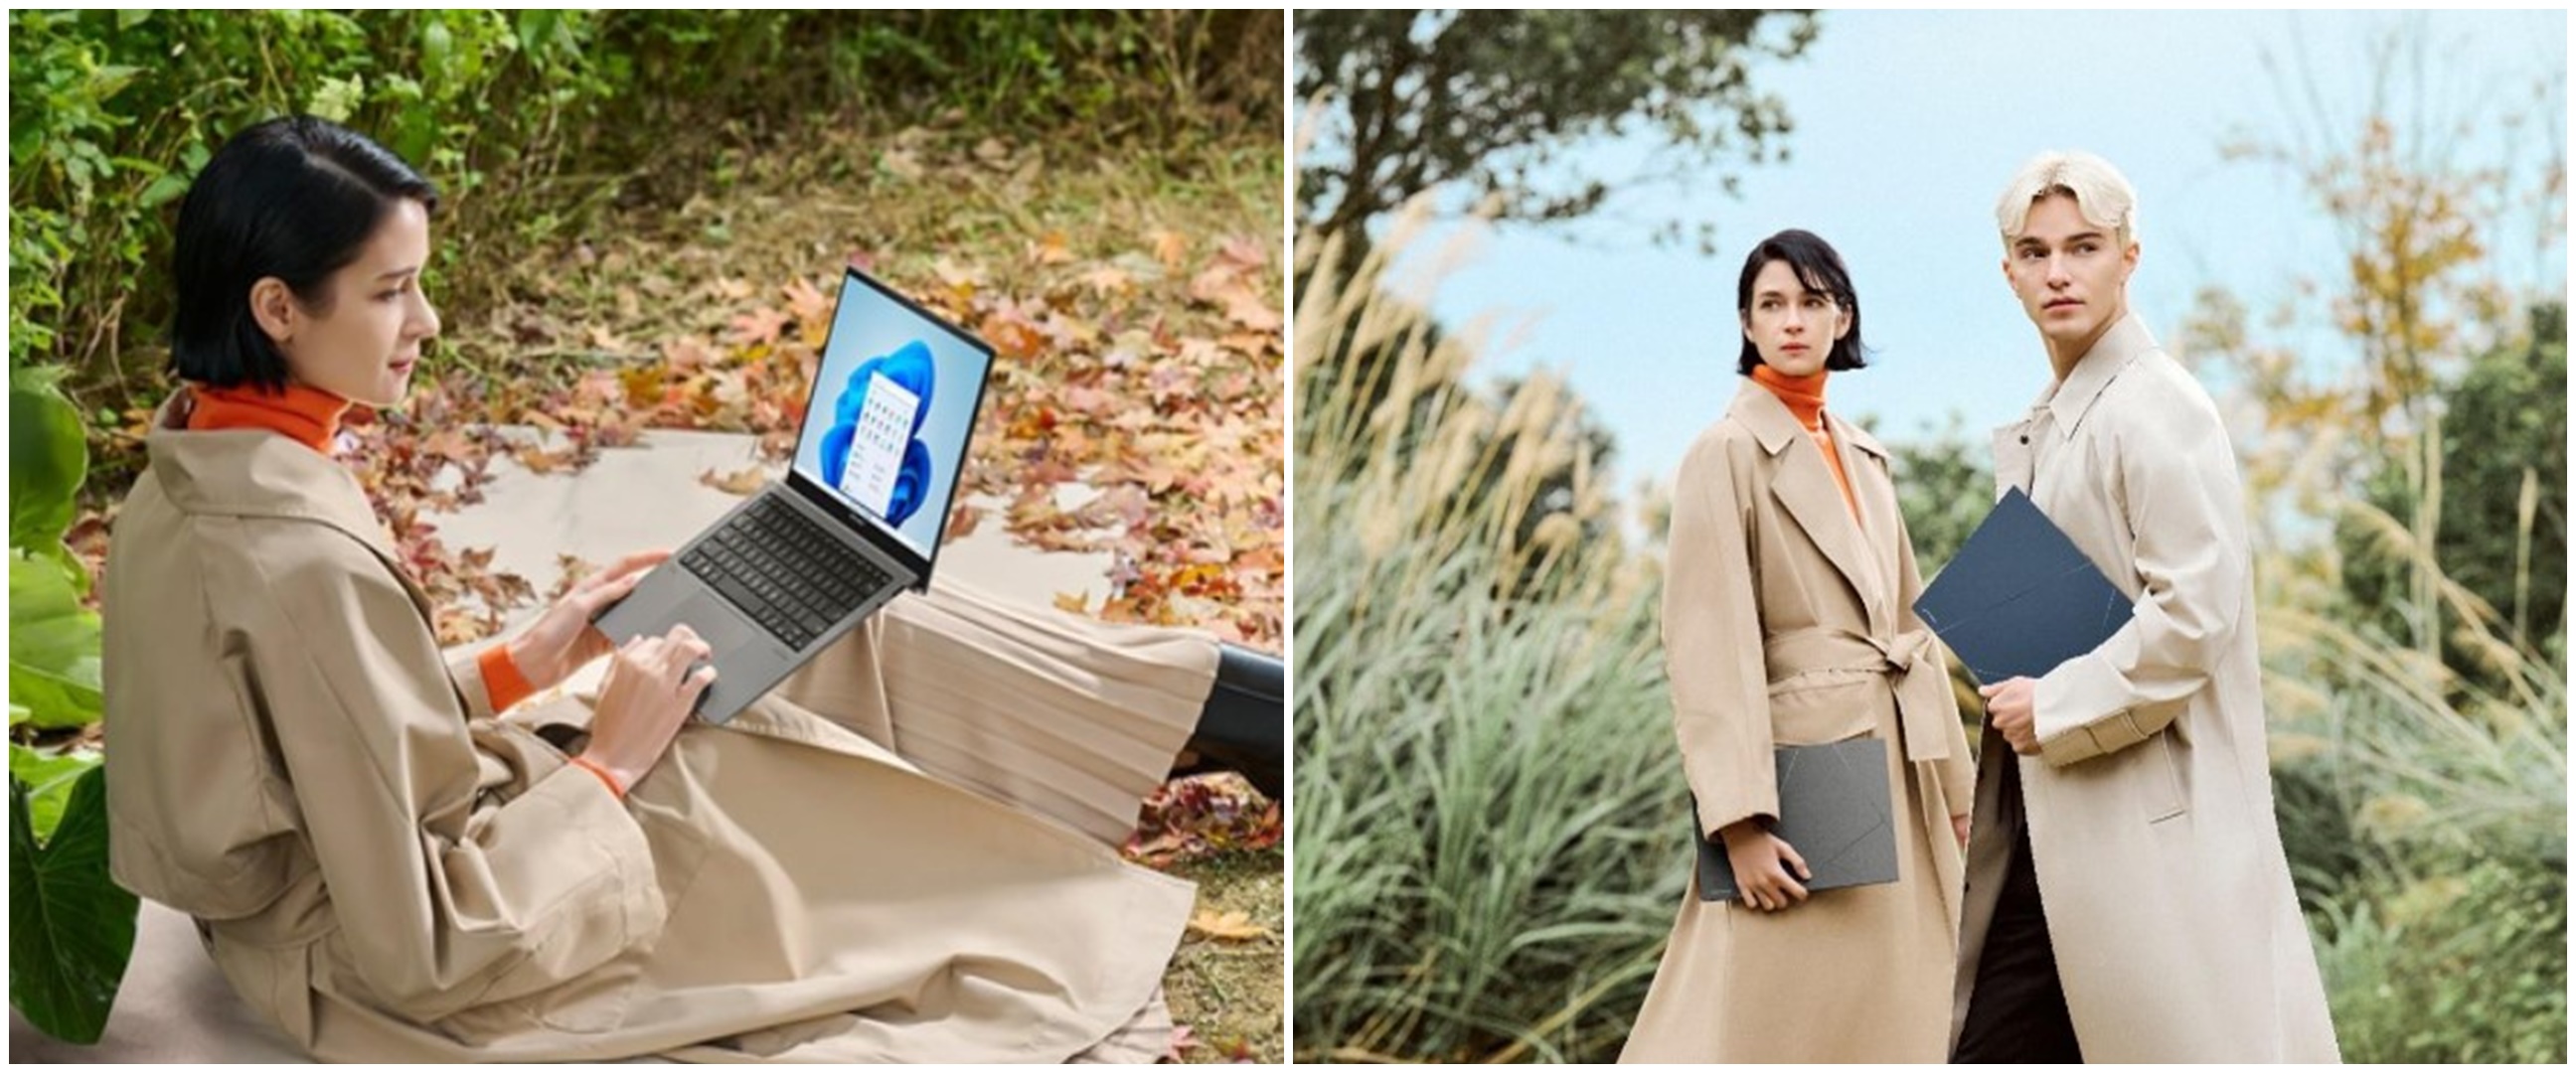 Zenbook S13 OLED, Laptop tipis dan stylish yang ramah lingkungan